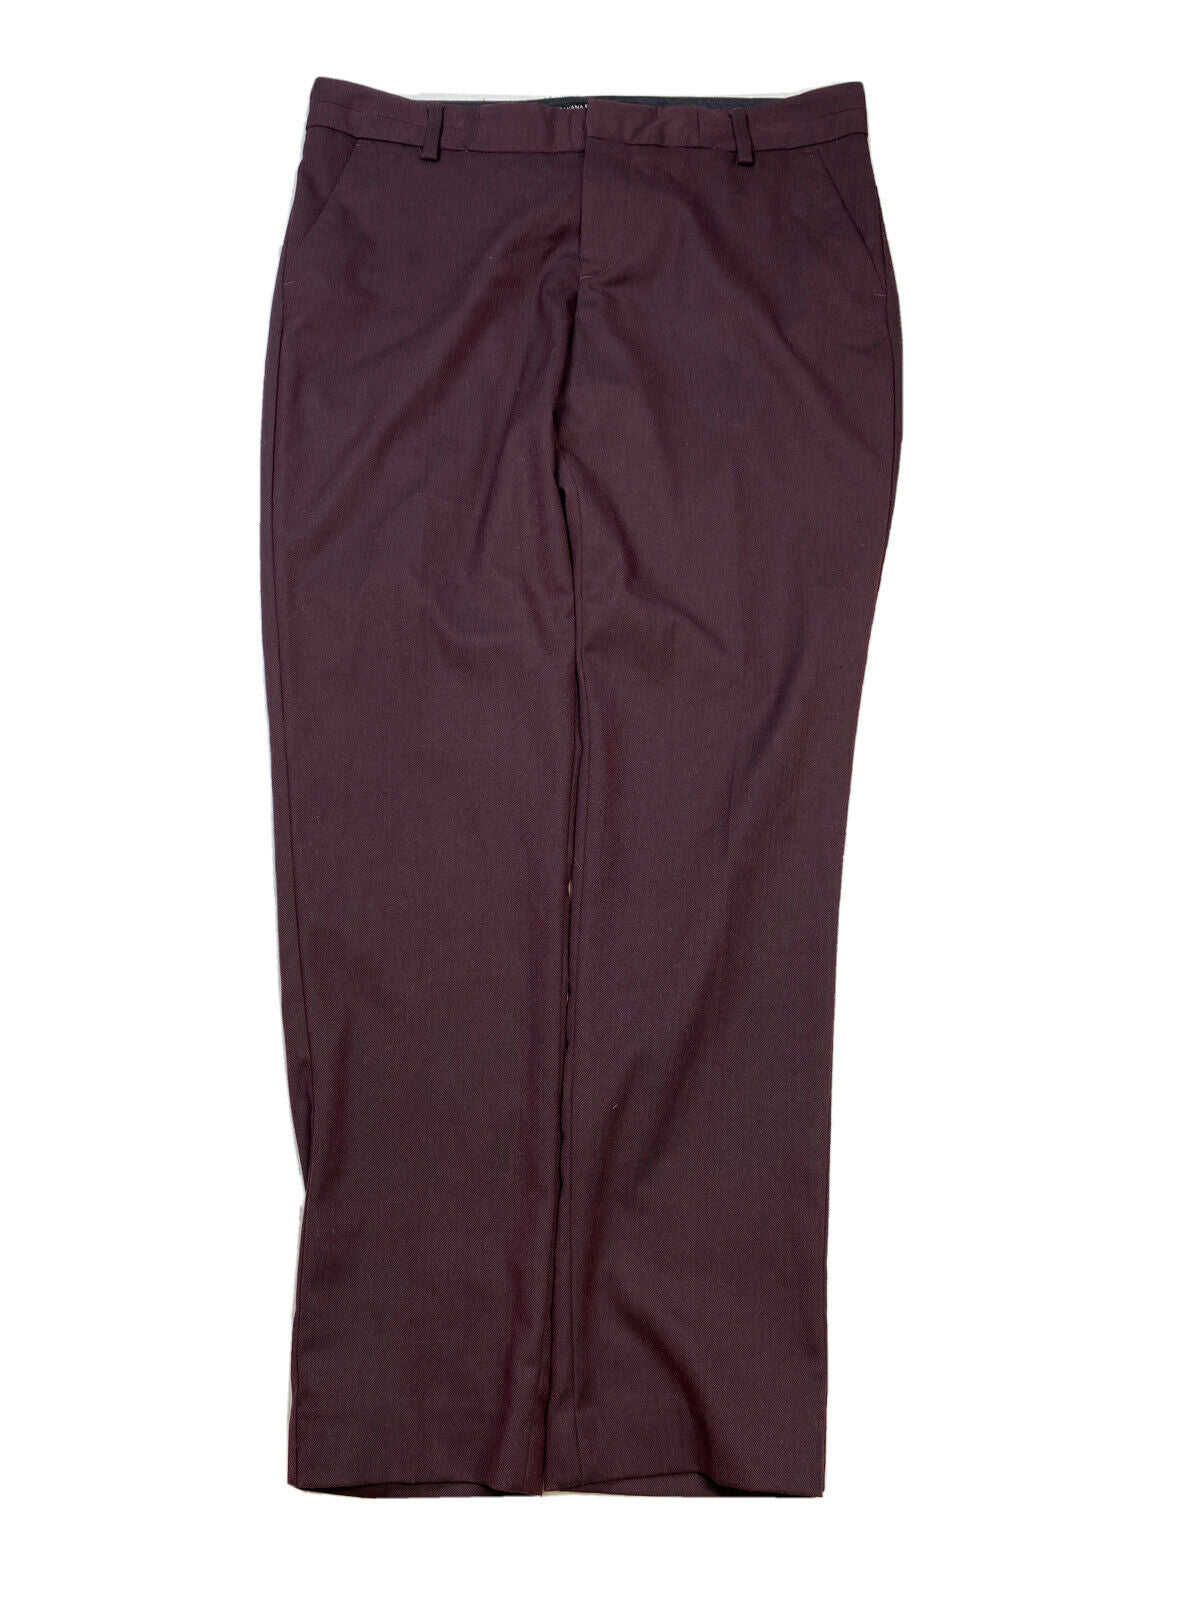 Banana Republic Women's Red/Burgundy Martin Fit Dress Pants Sz 8 Short